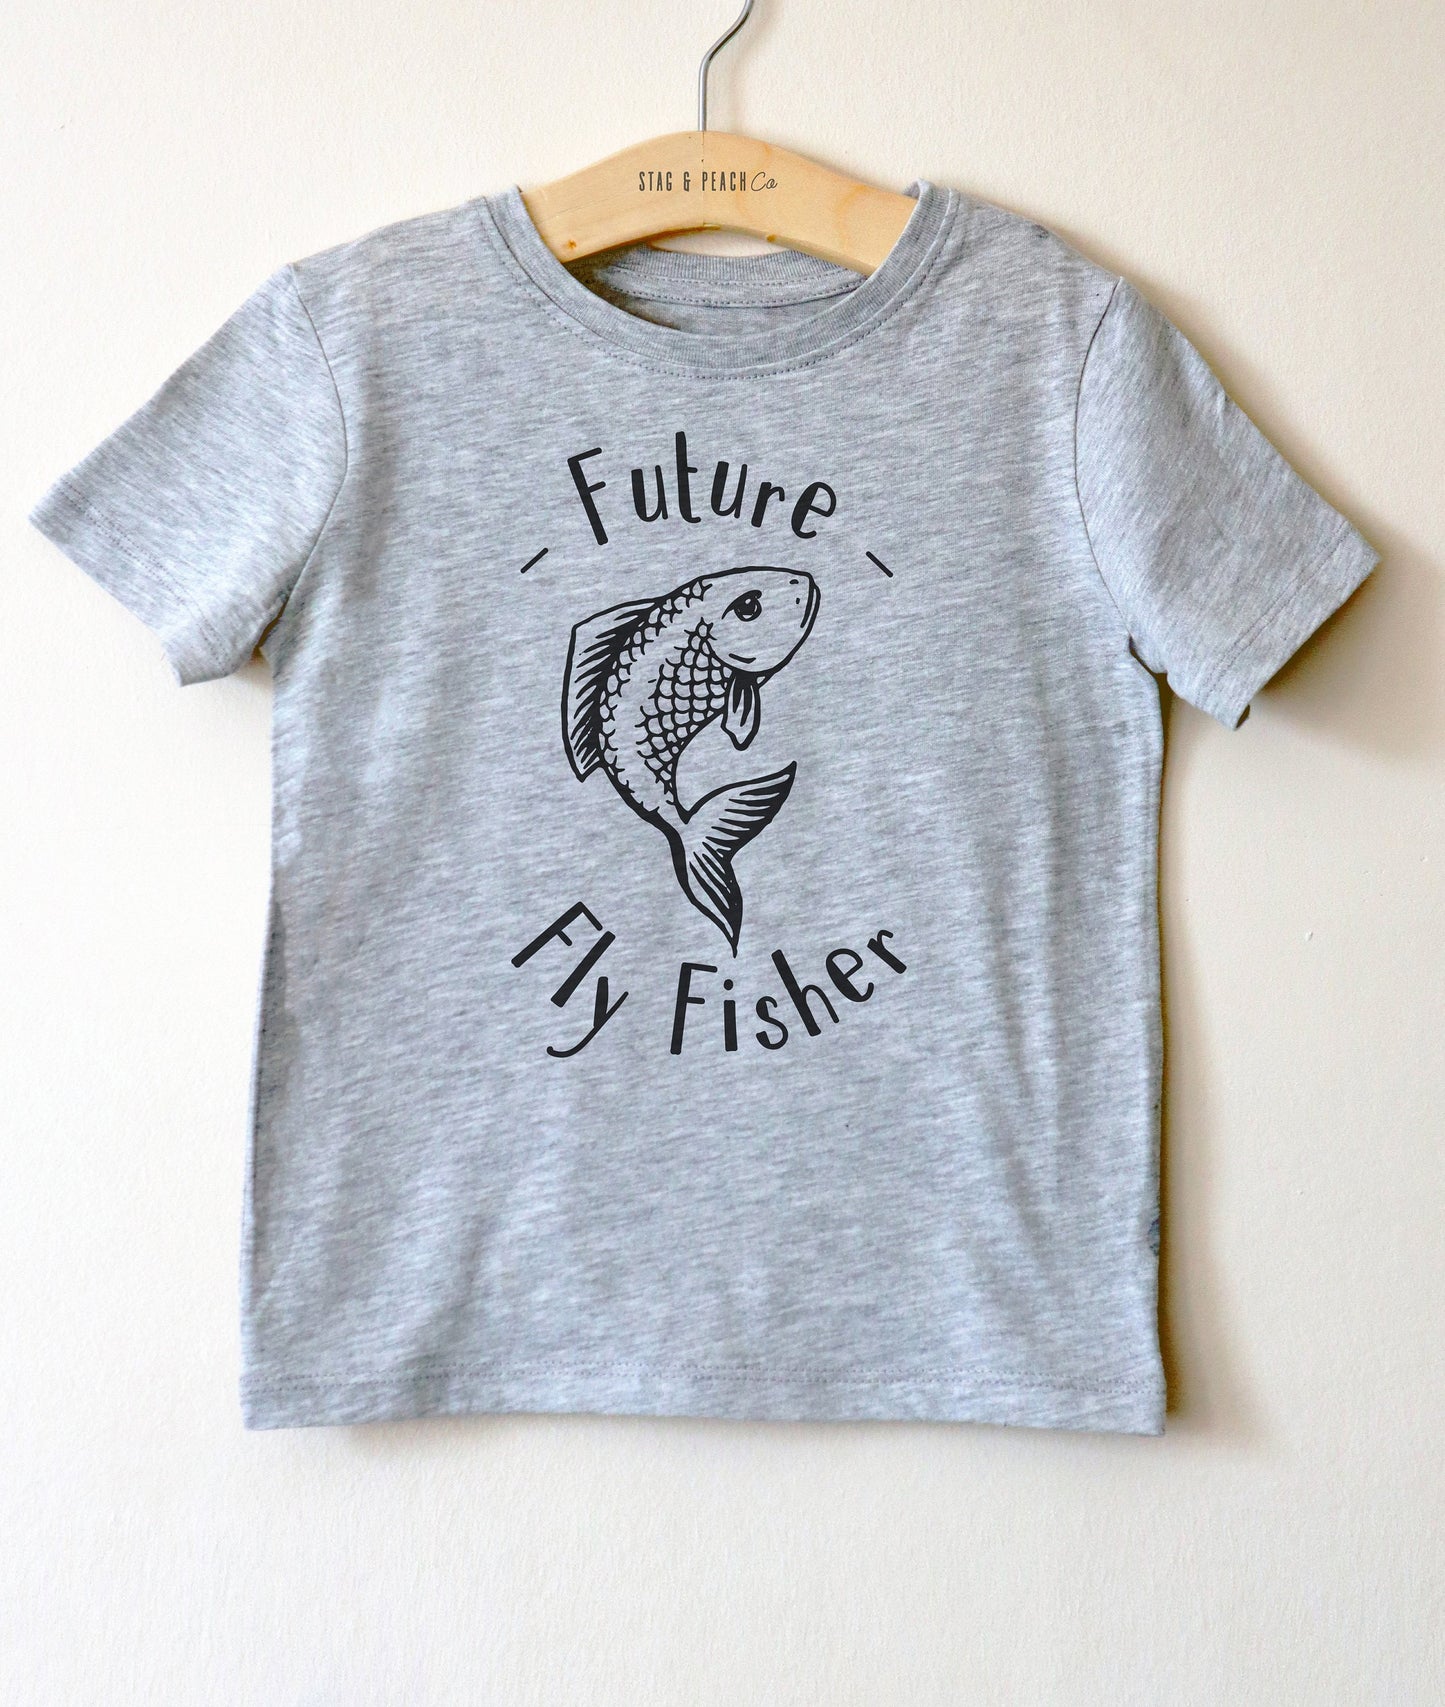 Future Fly Fisher Kids Shirt - Fishing Shirt, Fly Fishing Shirt, Fishing Kids Shirt, Fishing Birthday, Daddy and Me Shirts, Fisherman Gift Classic